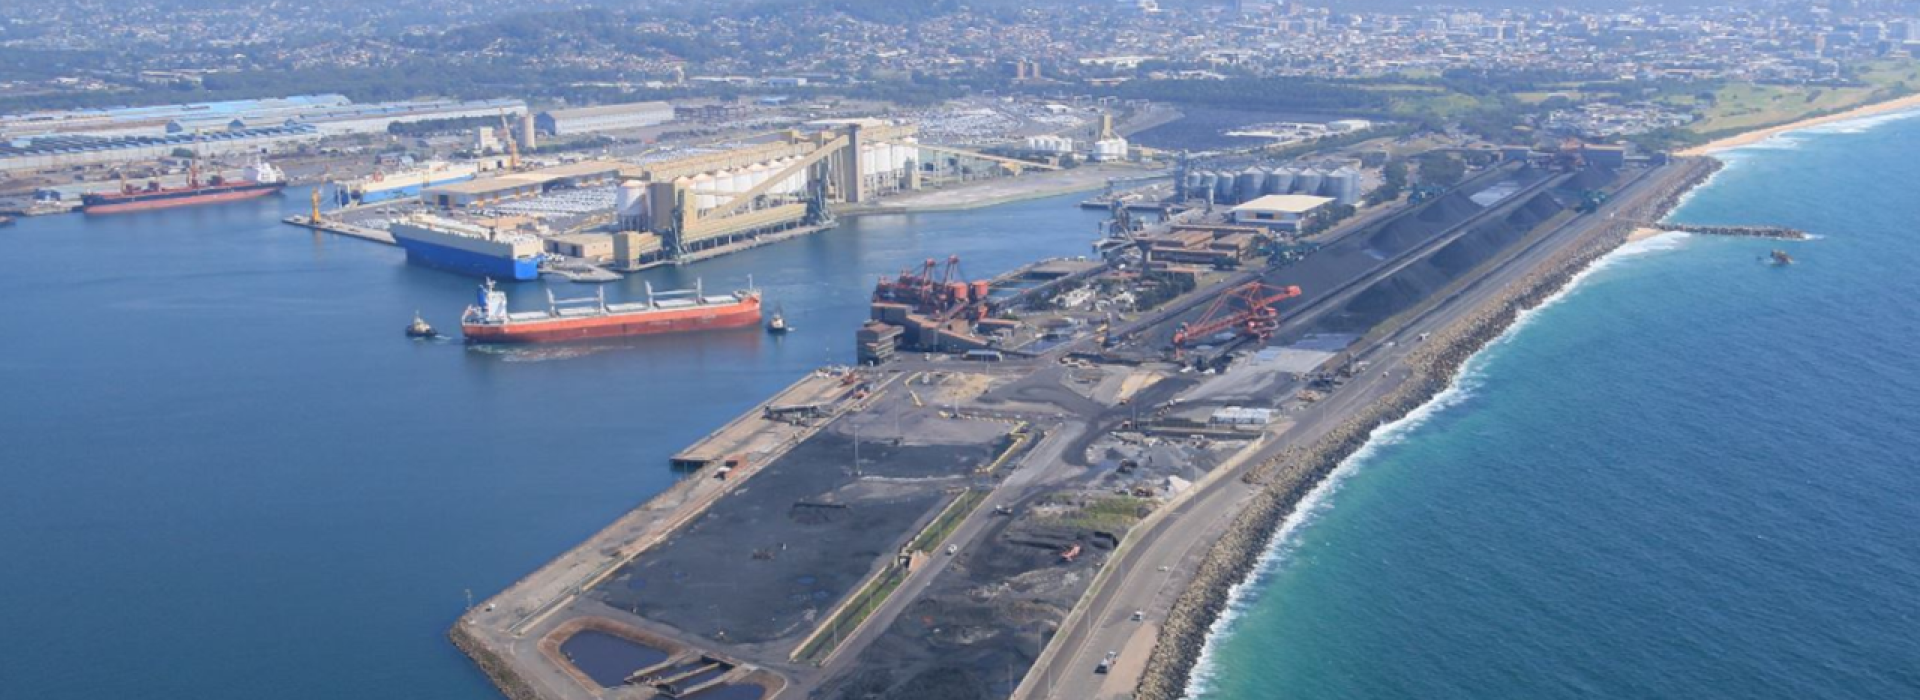 Port Kembla Gas Terminal - Marine Works